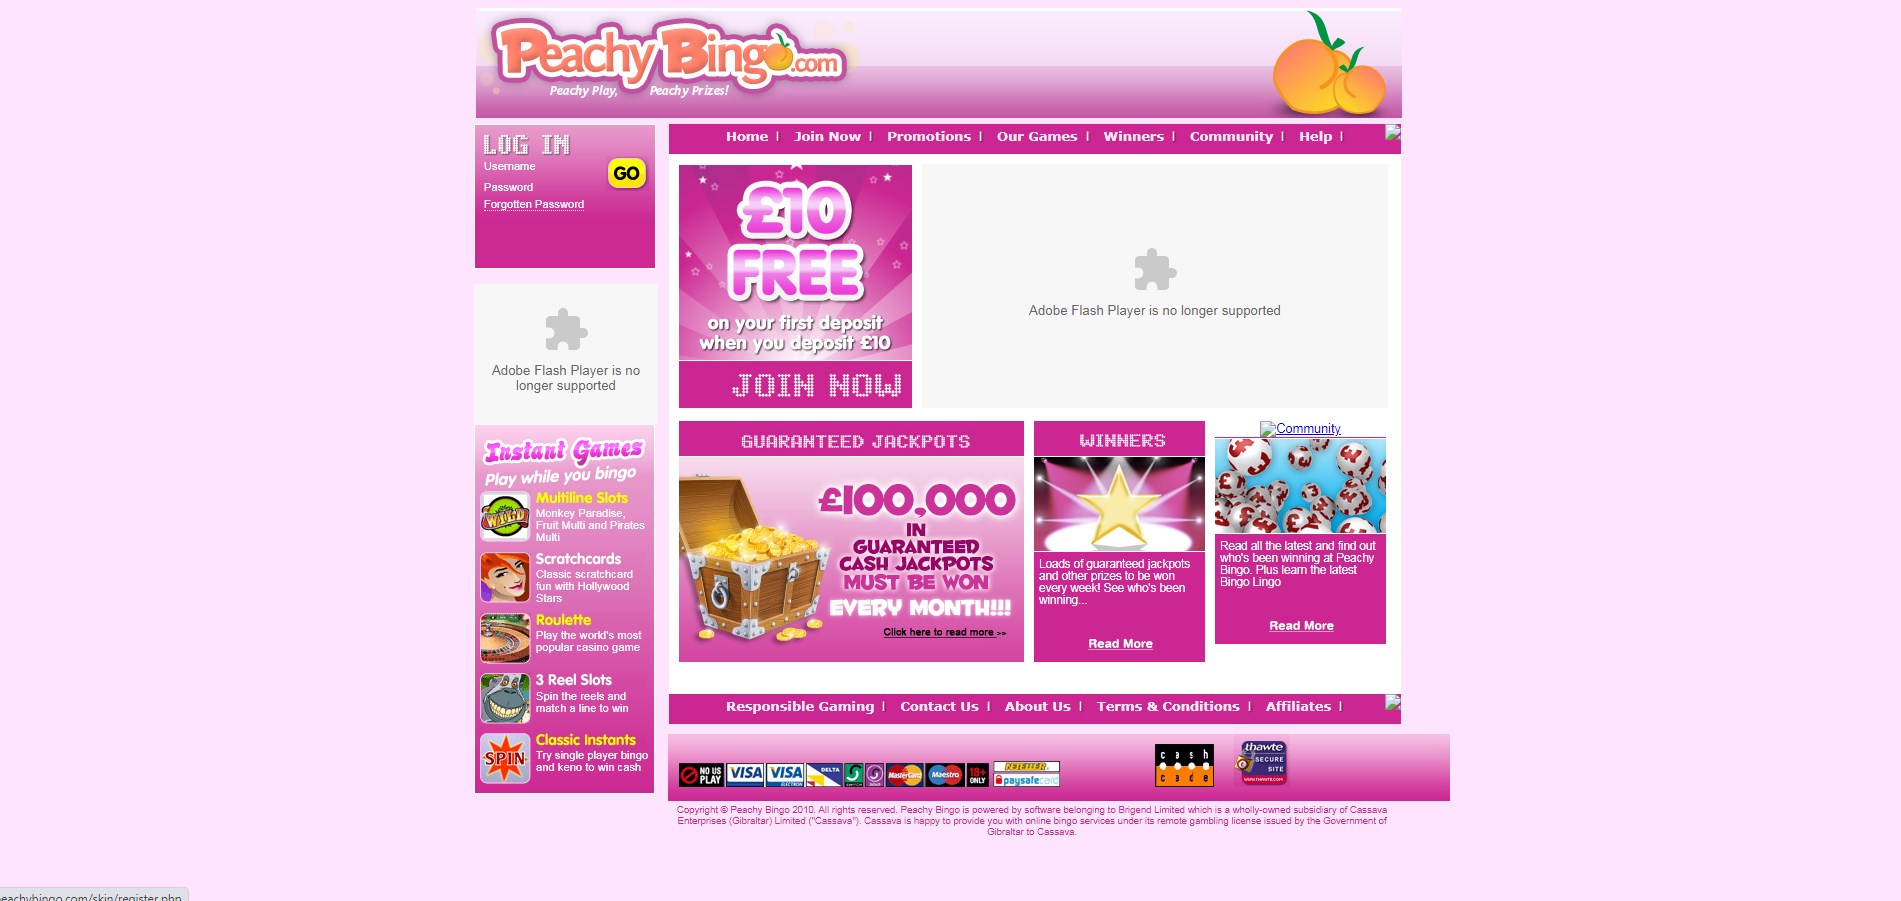 Peachy Bingo Casino Review